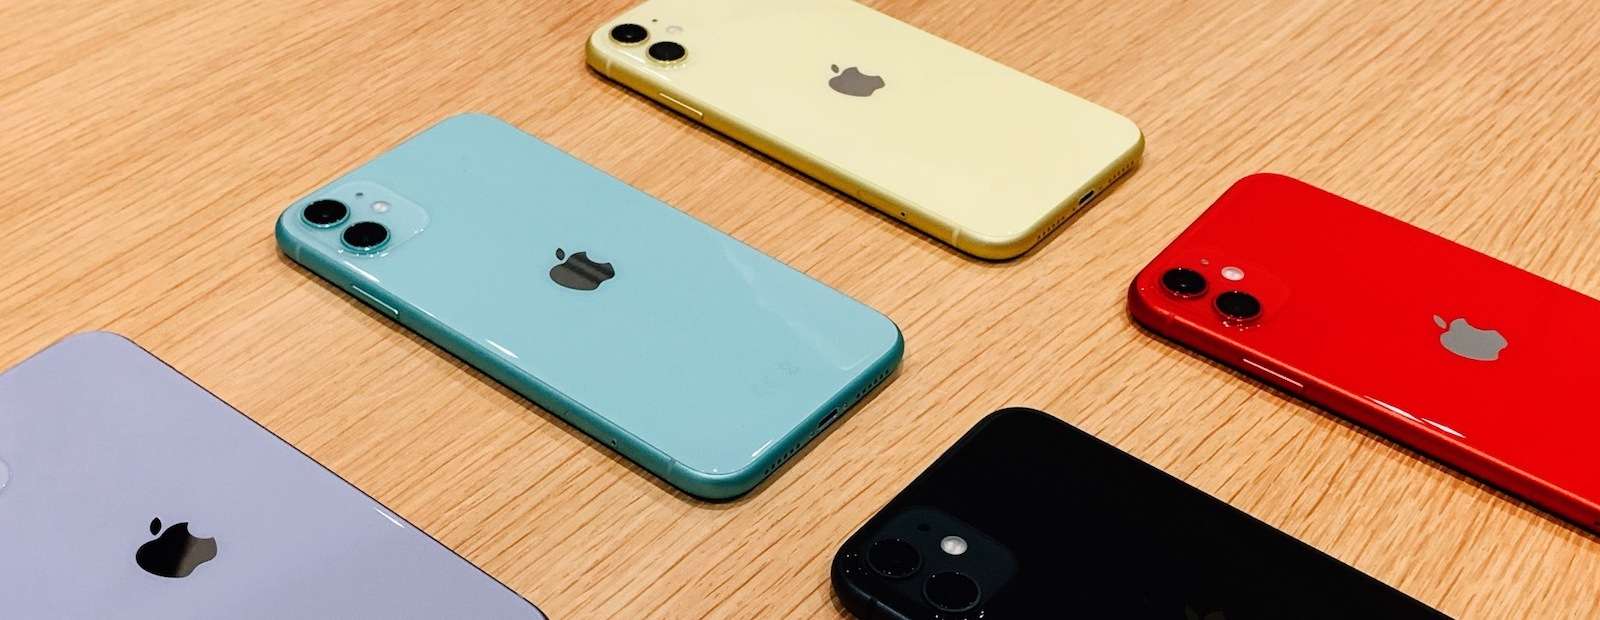 Айфон 11 цвета самого популярного iPhone